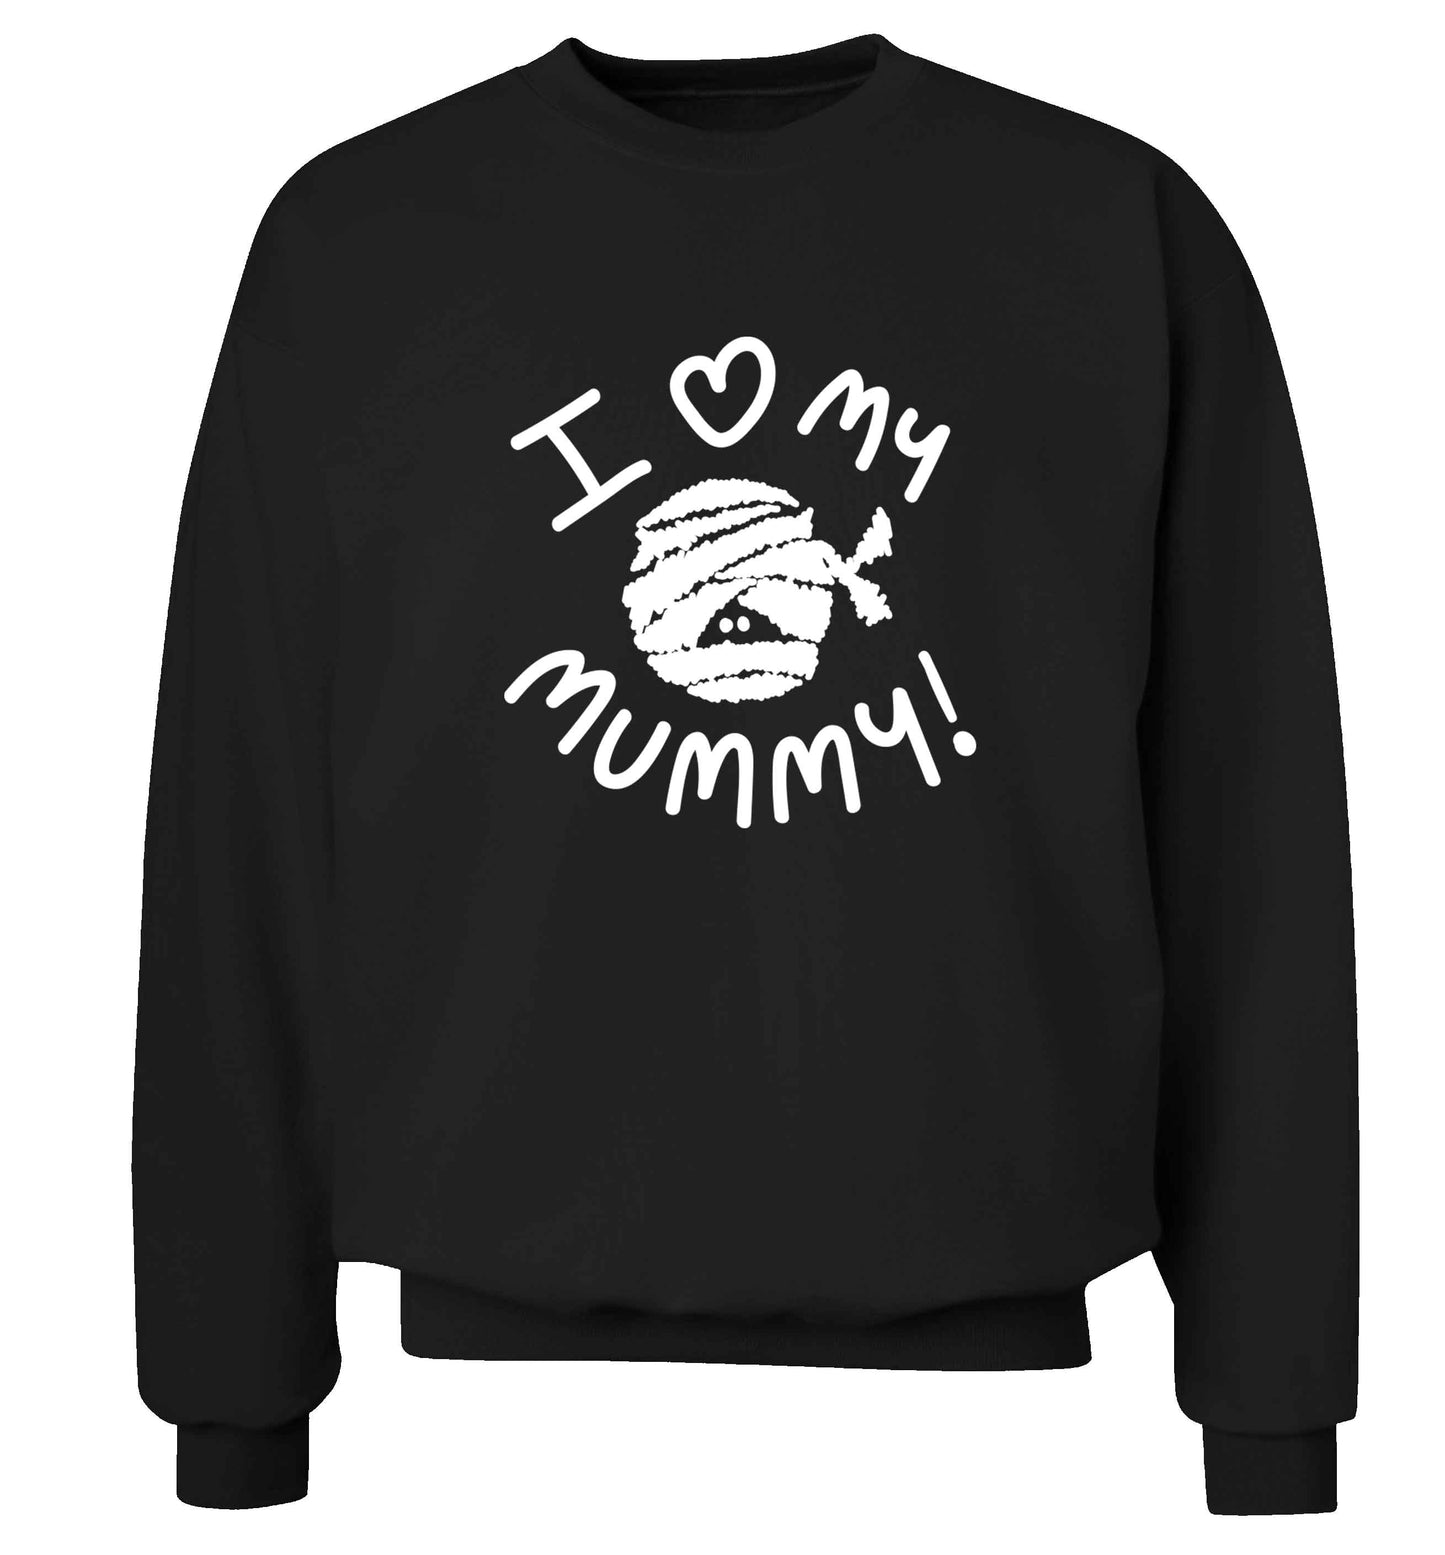 I love my mummy halloween pun adult's unisex black sweater 2XL